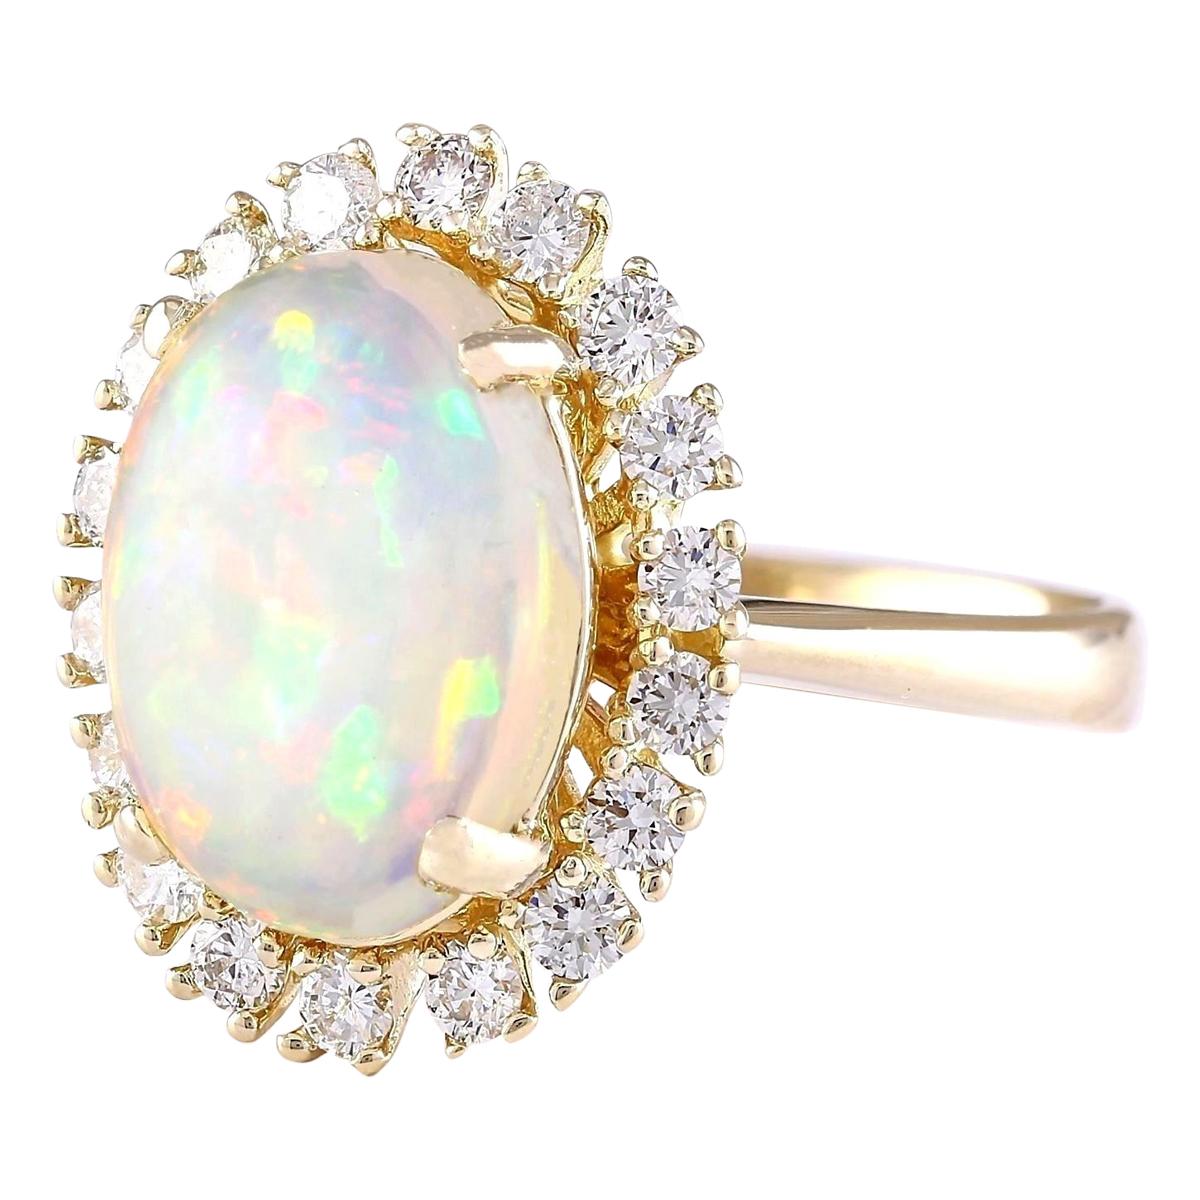 4.77 Carat Natural Opal 14 Karat Yellow Gold Diamond Ring
Stamped: 14K Yellow Gold
Total Ring Weight: 8.8 Grams
Total Natural Opal Weight is 3.97 Carat (Measures: 14.00x10.00 mm)
Color: Multicolor
Total Natural Diamond Weight is 0.80 Carat
Color: